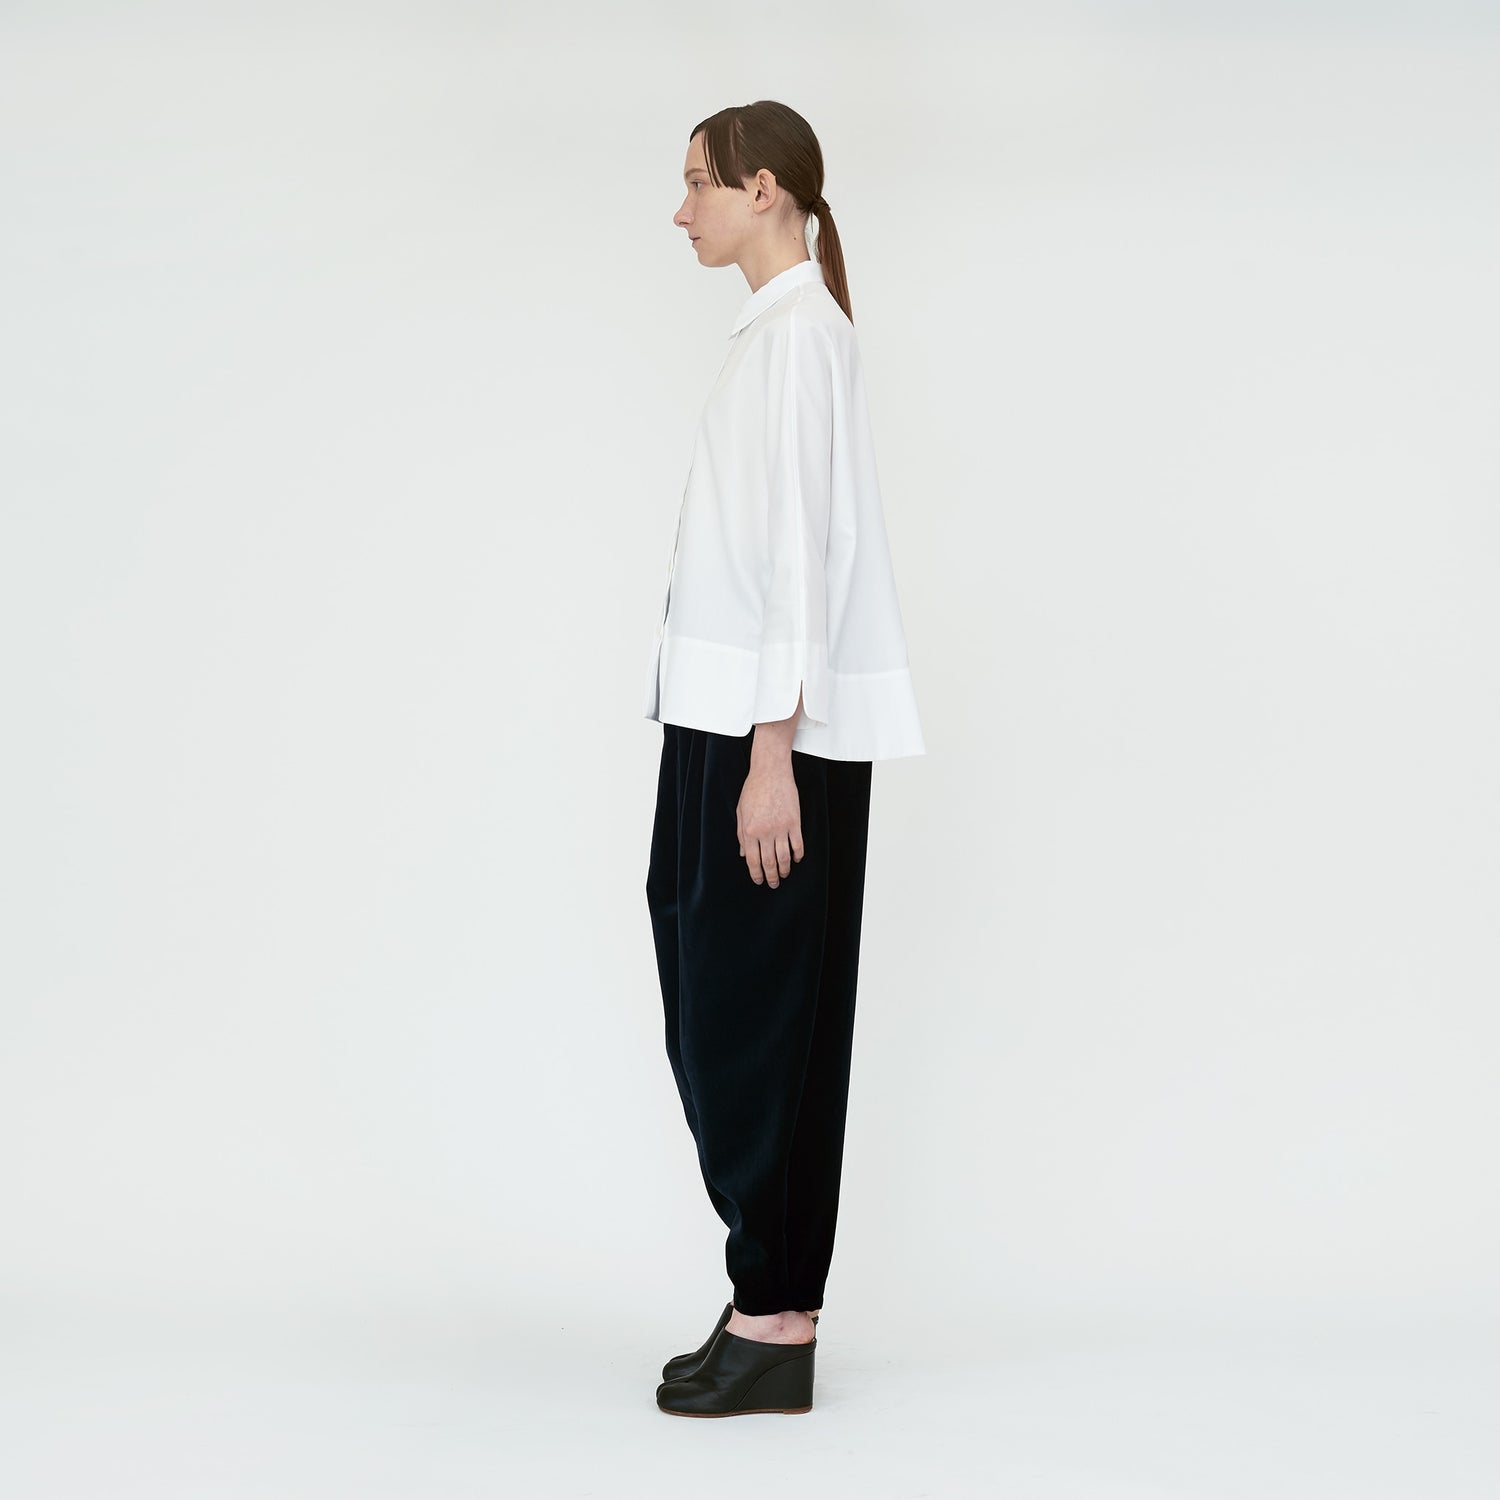 Lululemon Men’s Soft Jersey Tapered Pant Black Size Medium M